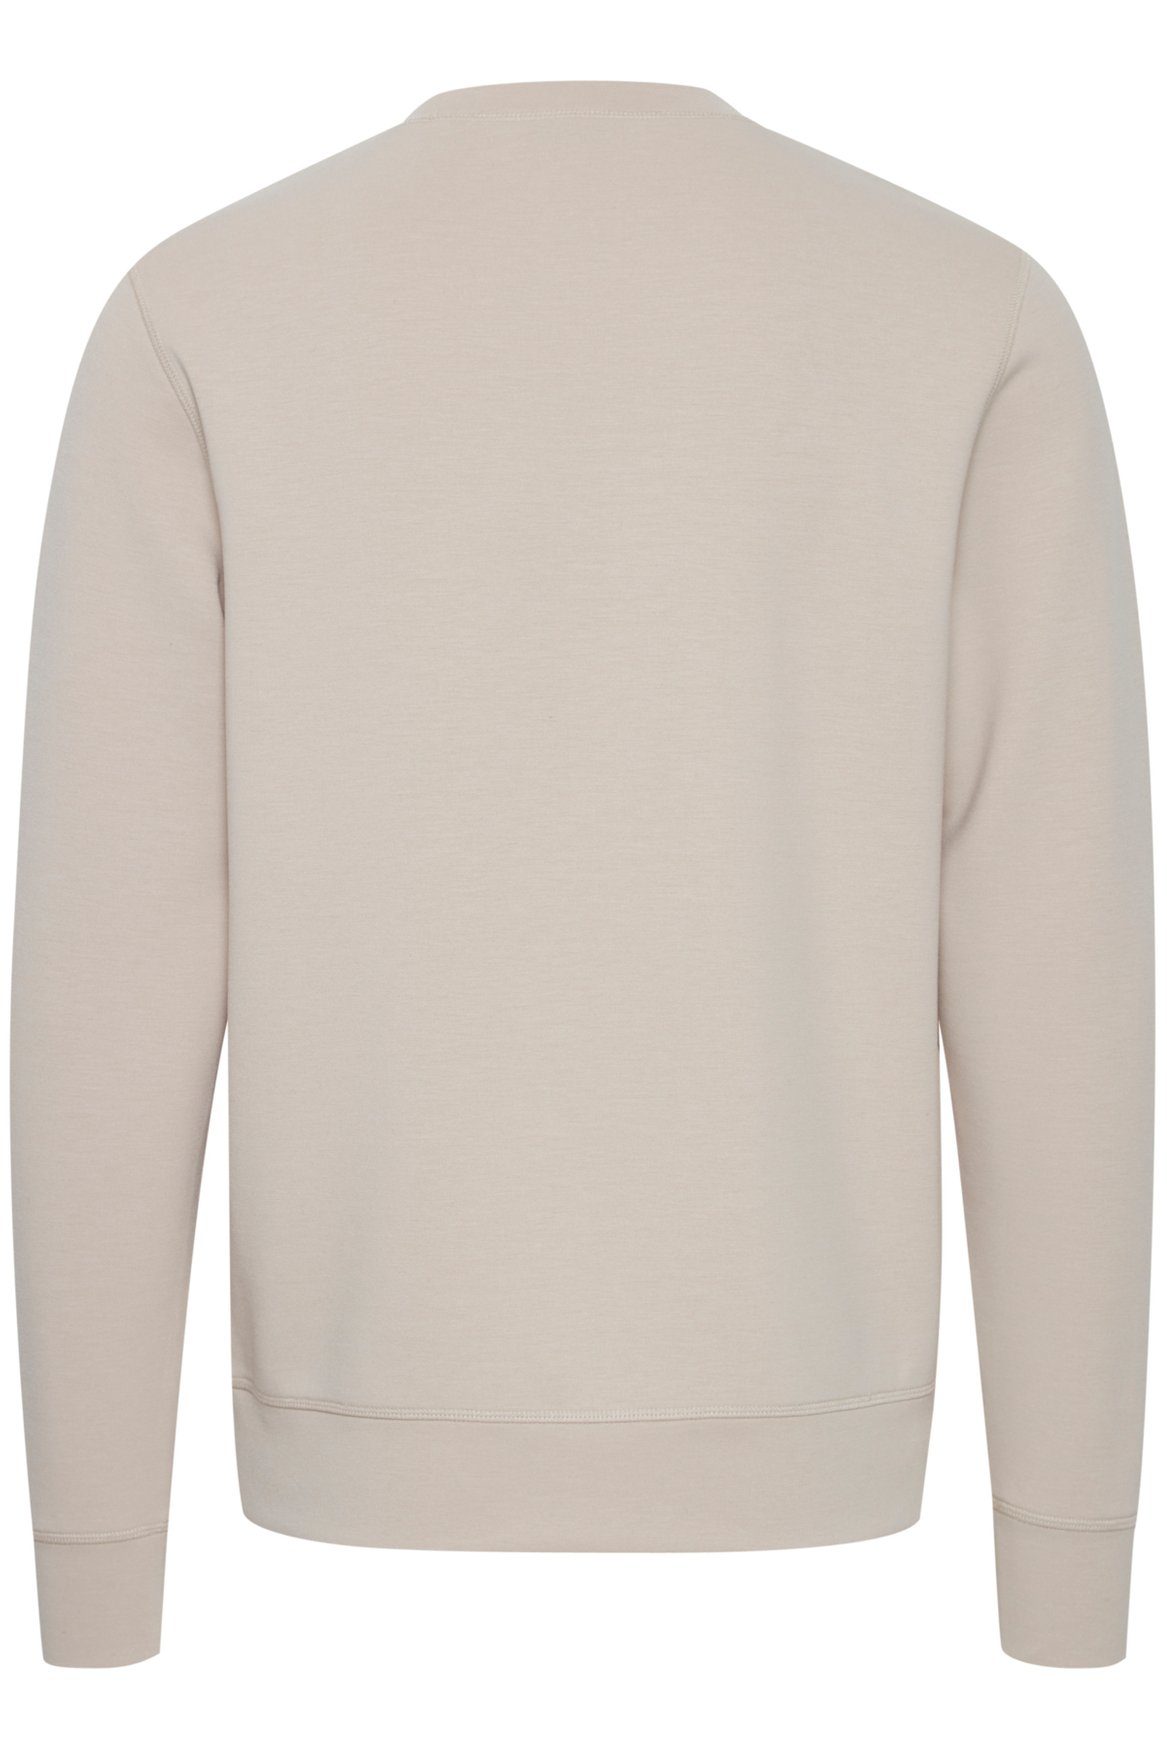 Friday Rundhals Casual Hellgrau 5917 Sweatshirt Pullover Langarm in Basic CFSebastian